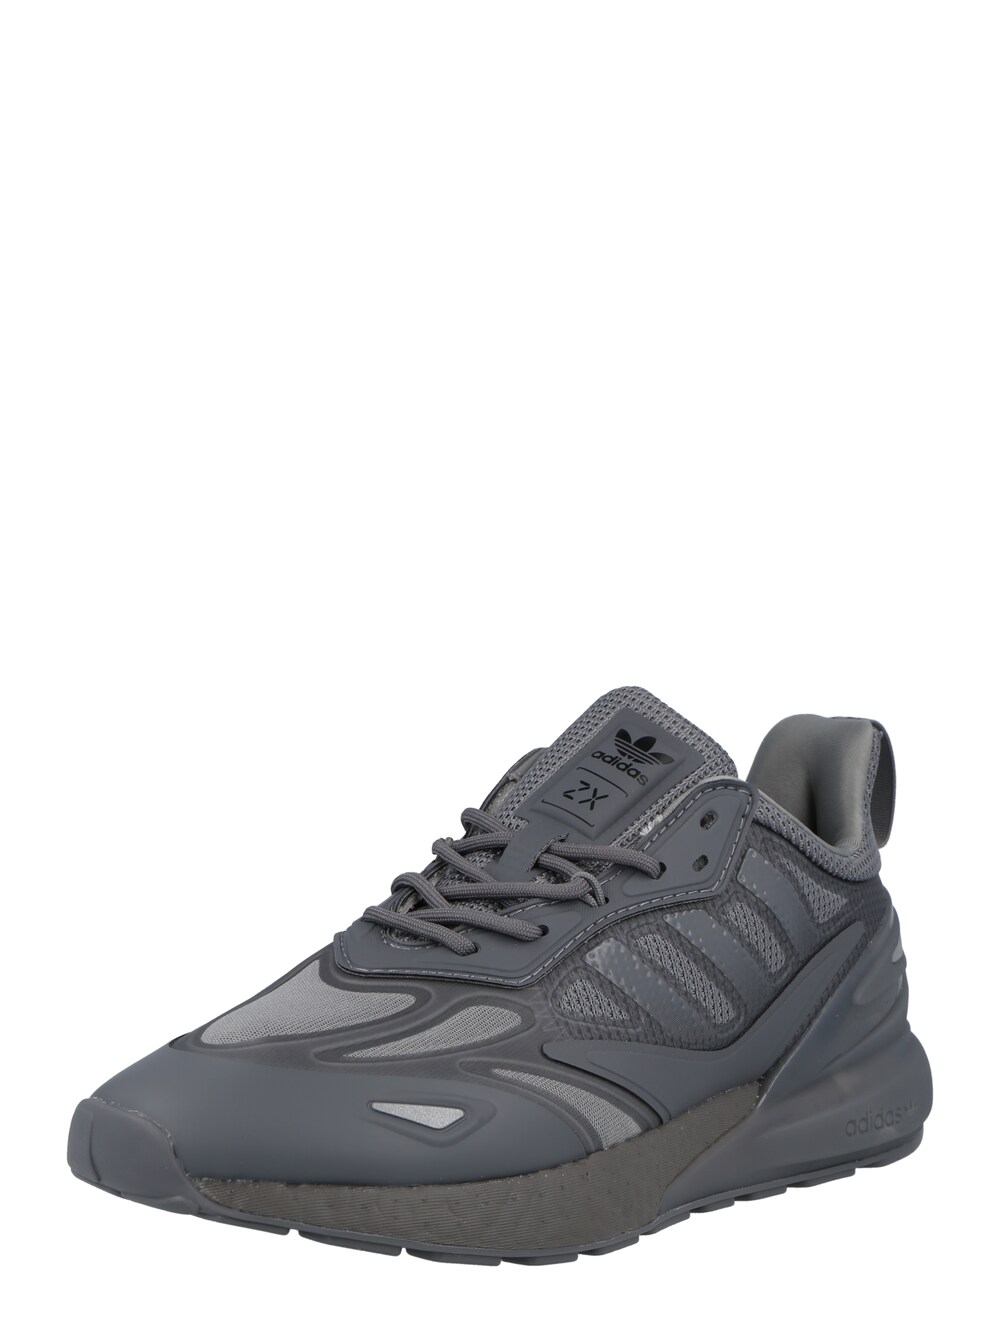 Кроссовки Adidas Zx 2K Boost 2.0, серый/темно-серый кроссовки мужские adidas zx 2k boost серый